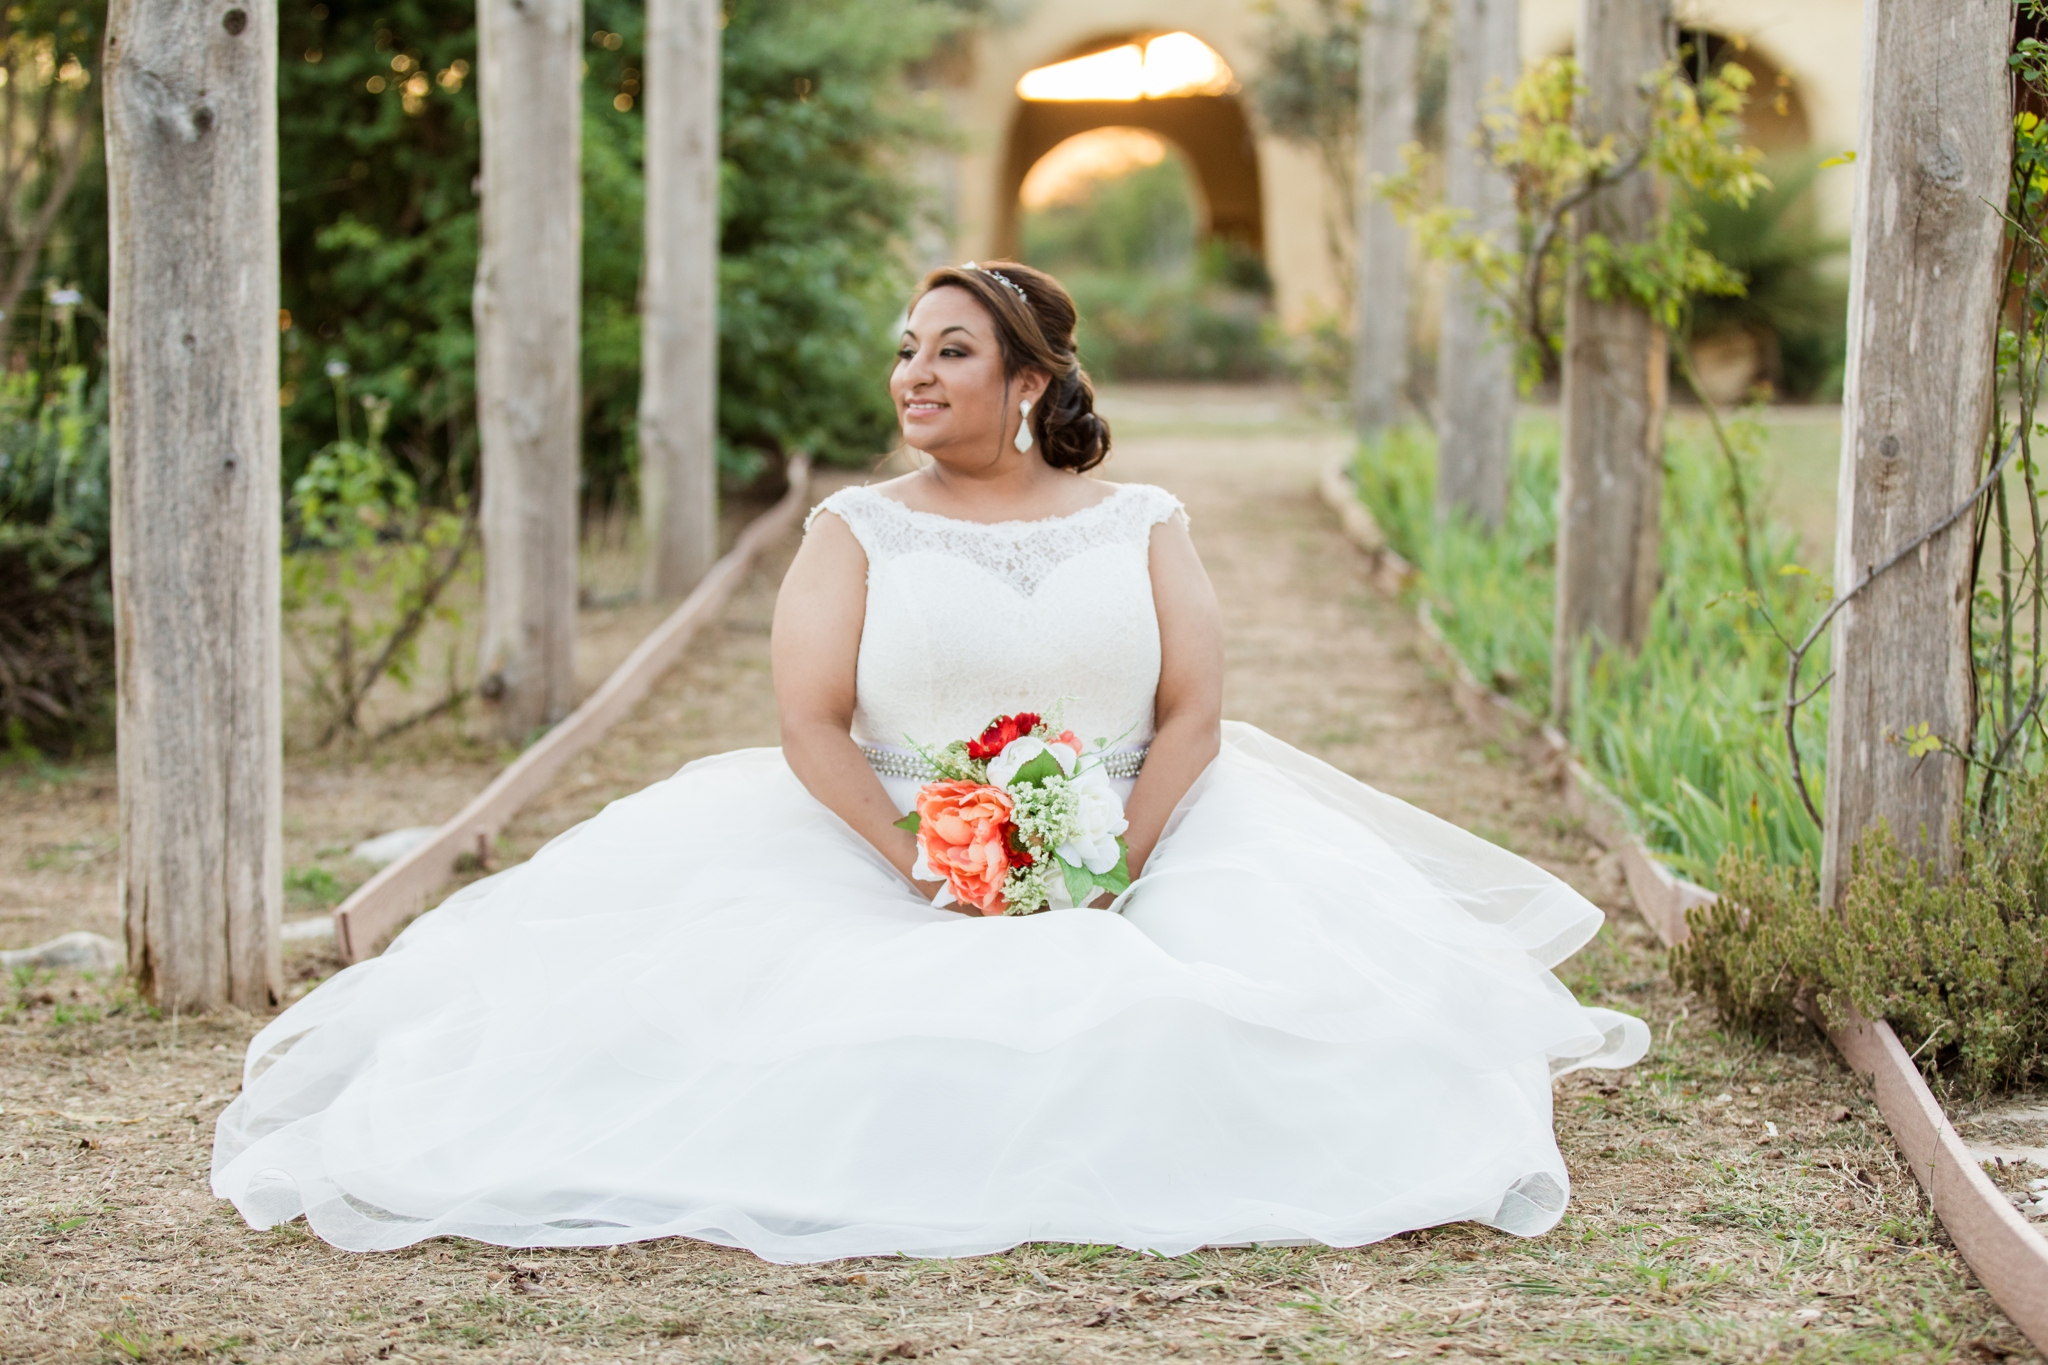 Rustic Bridal Session at Roszell Gardens in San Antonio, TX by Dawn Elizabeth Studios